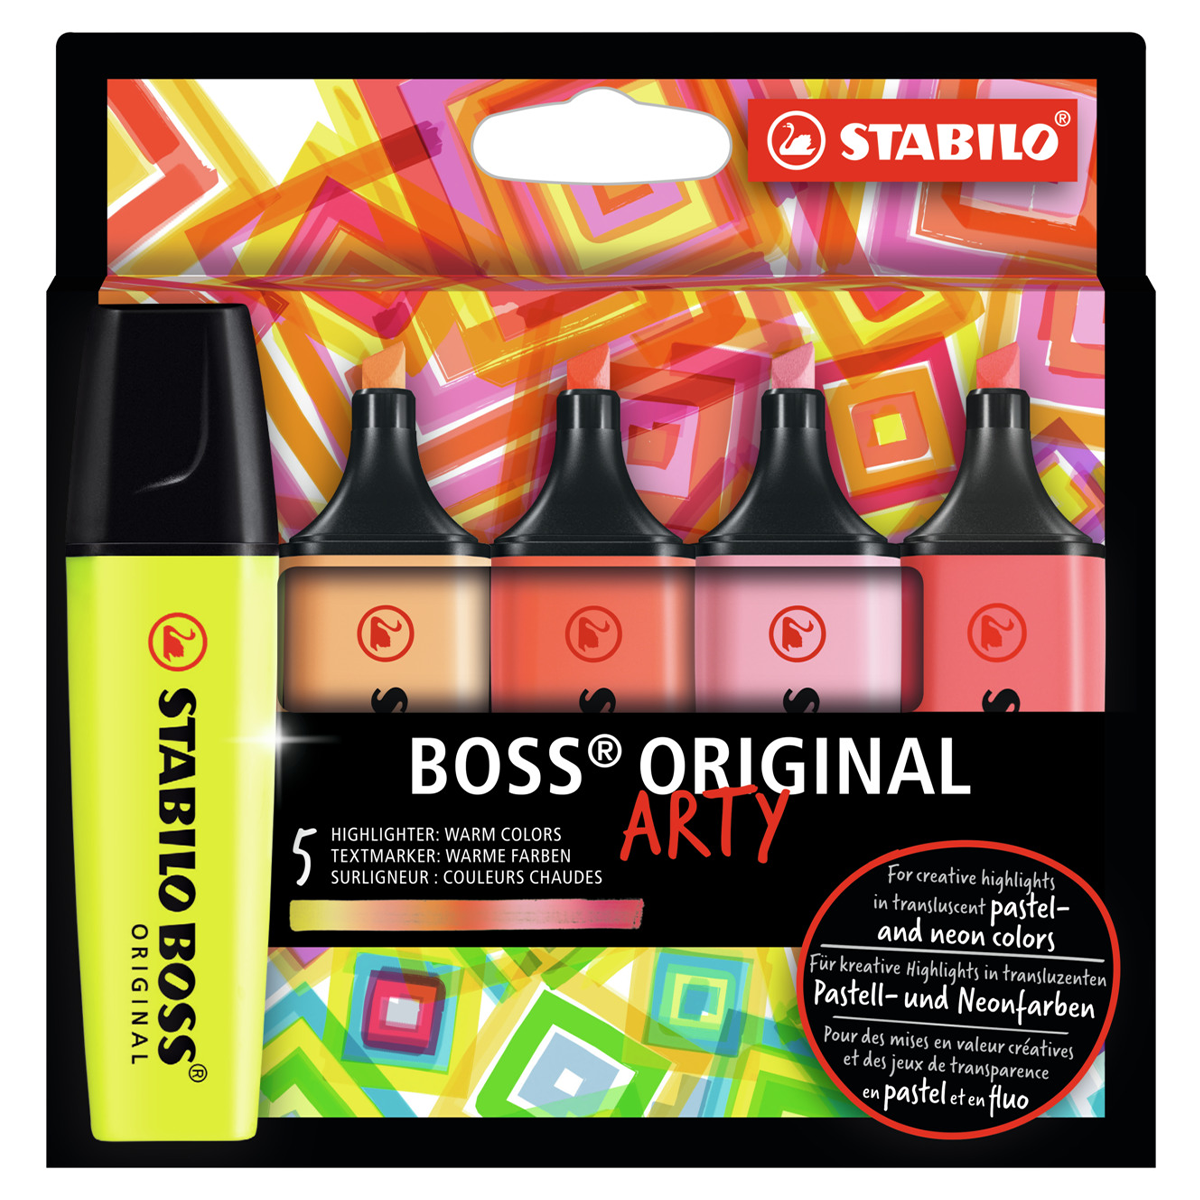 Stabilo Boss Original Highlighter 4 set 